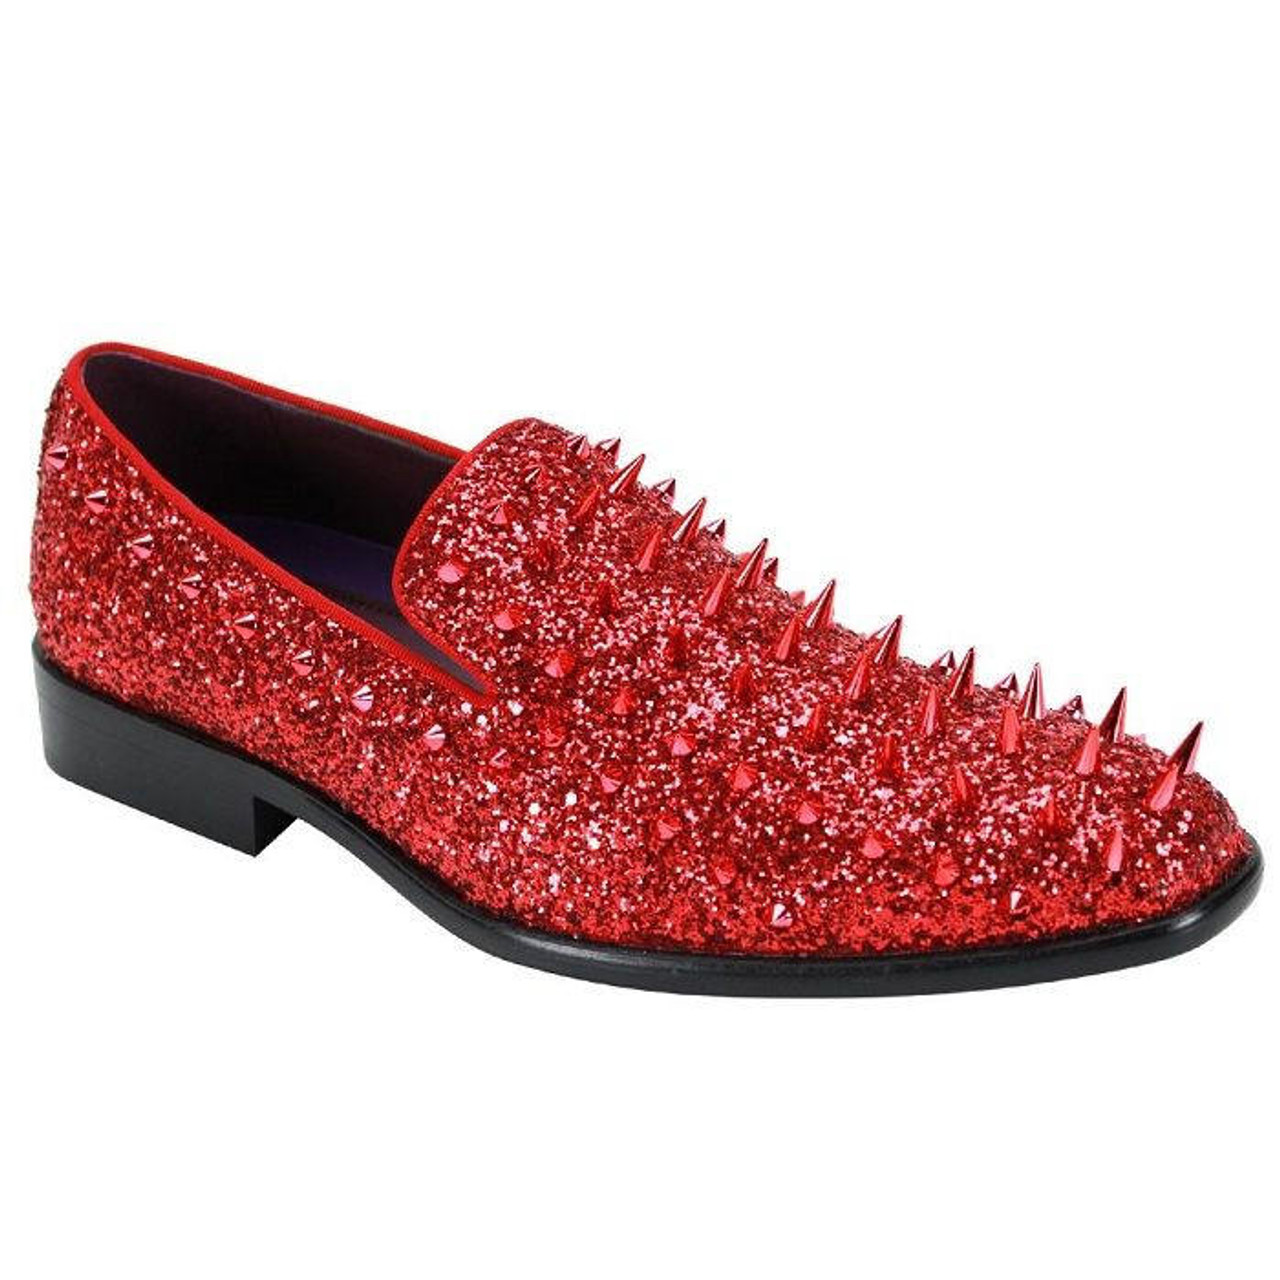 Men's Red Dress Shoes